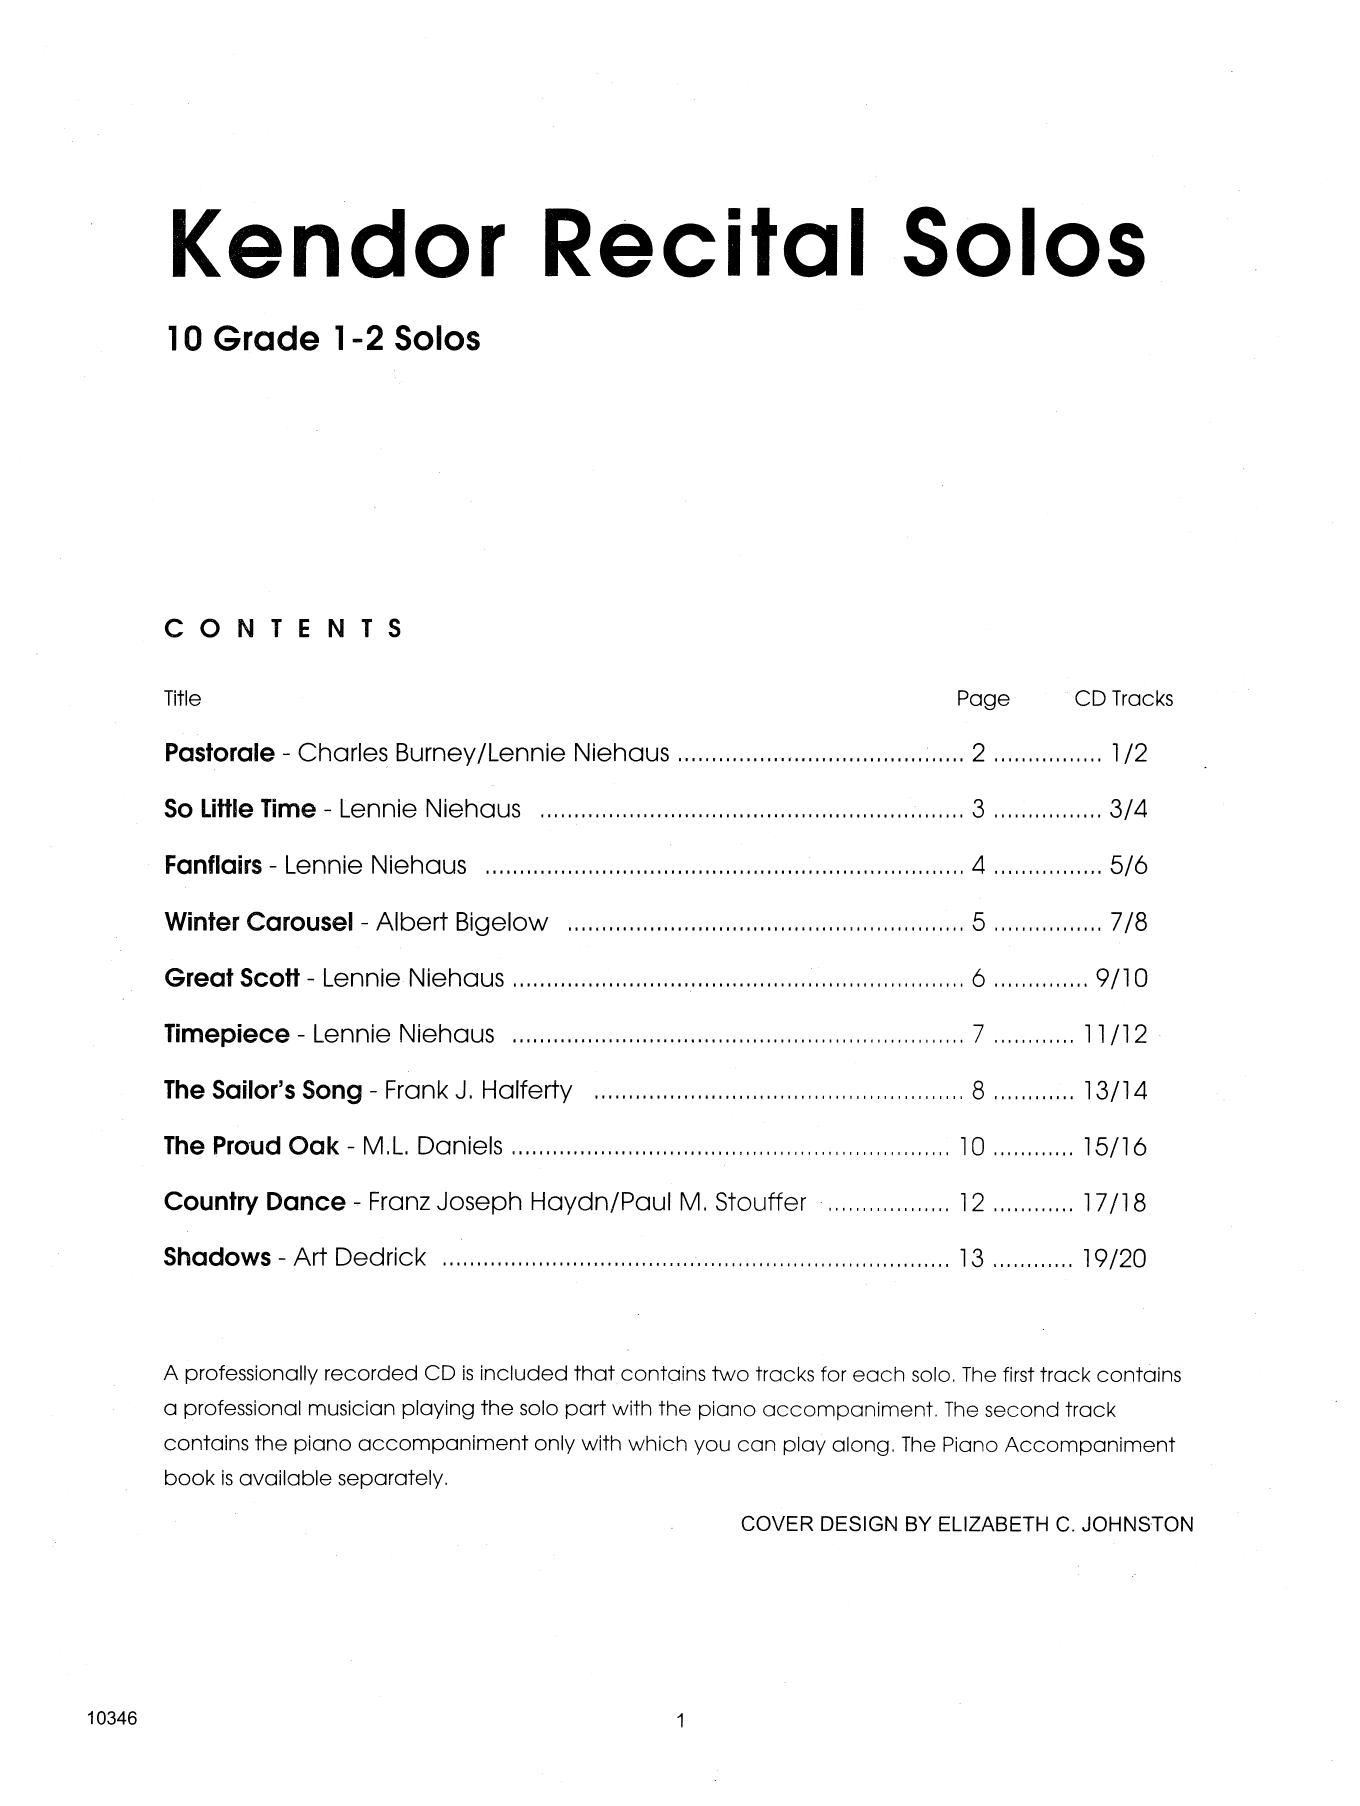 Download Various Kendor Recital Solos - Baritone B.C. - Sheet Music